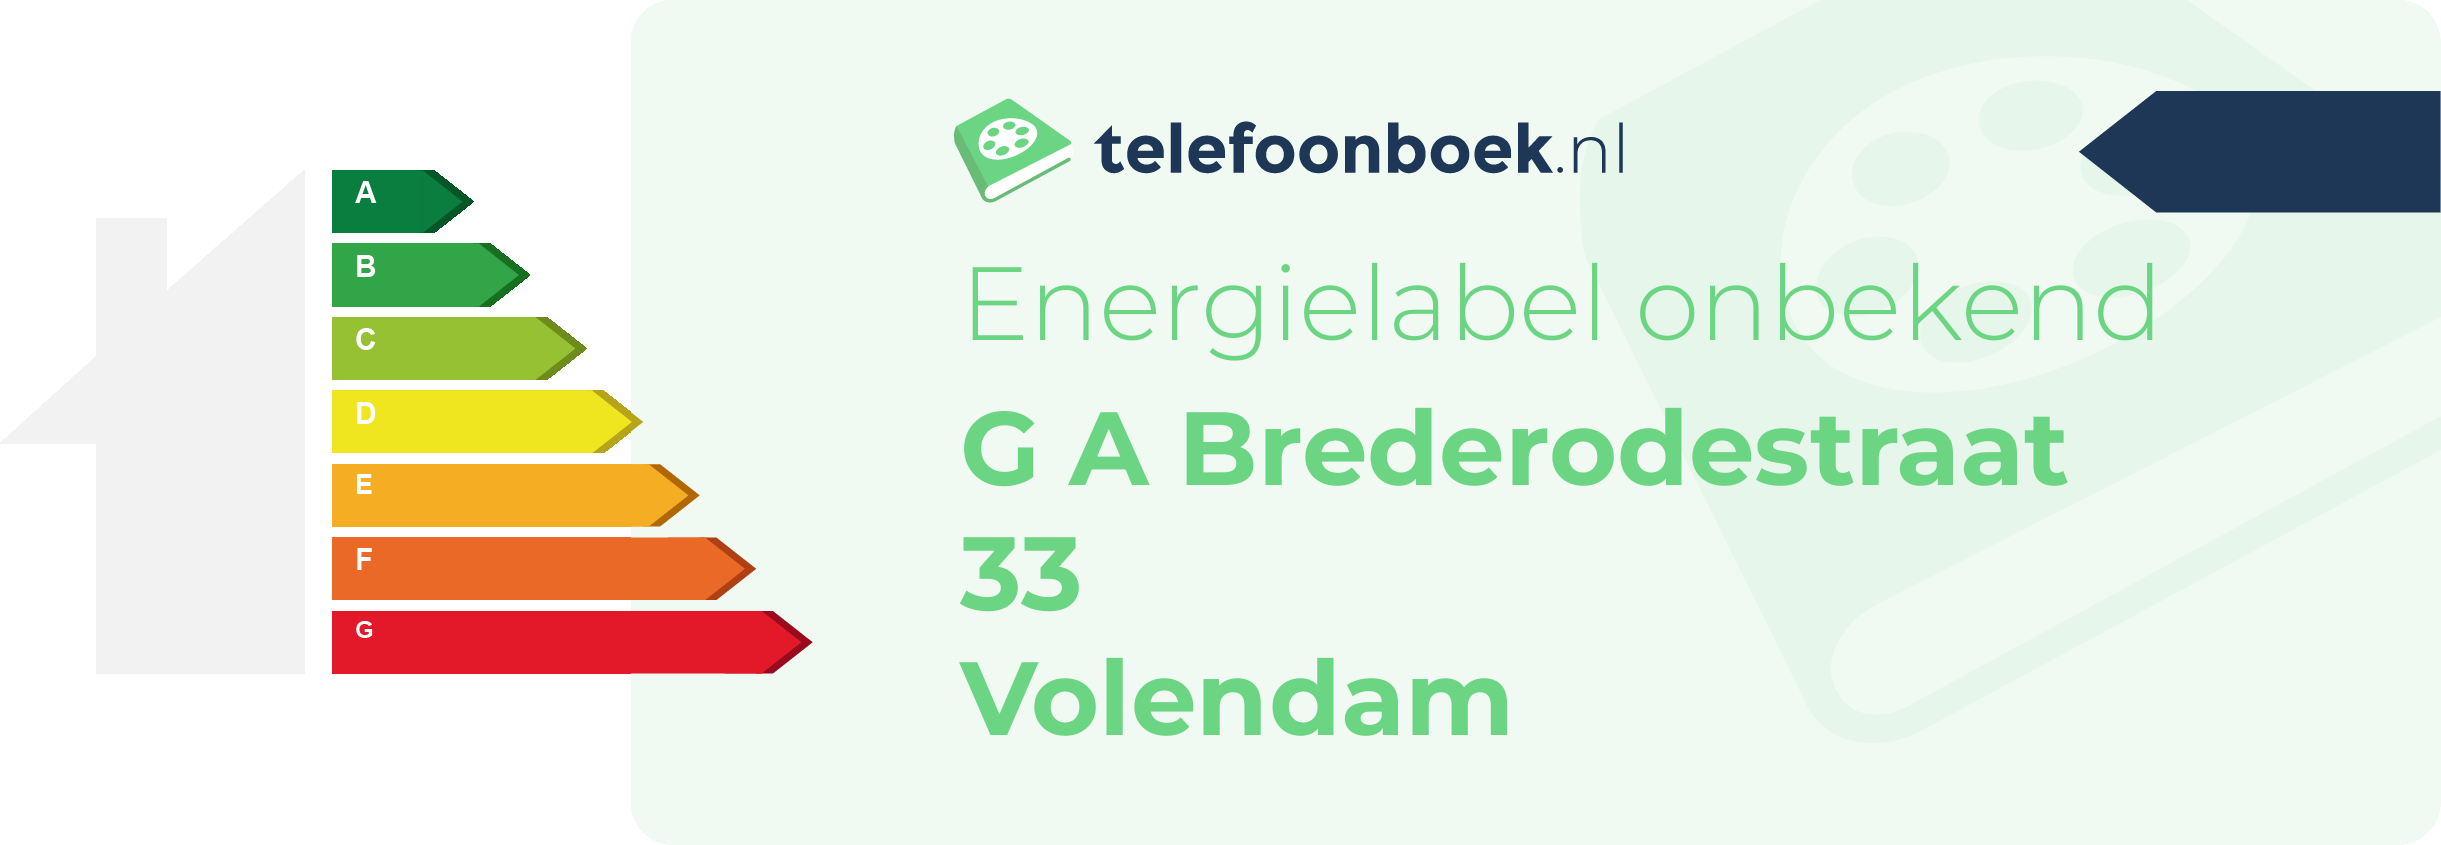 Energielabel G A Brederodestraat 33 Volendam